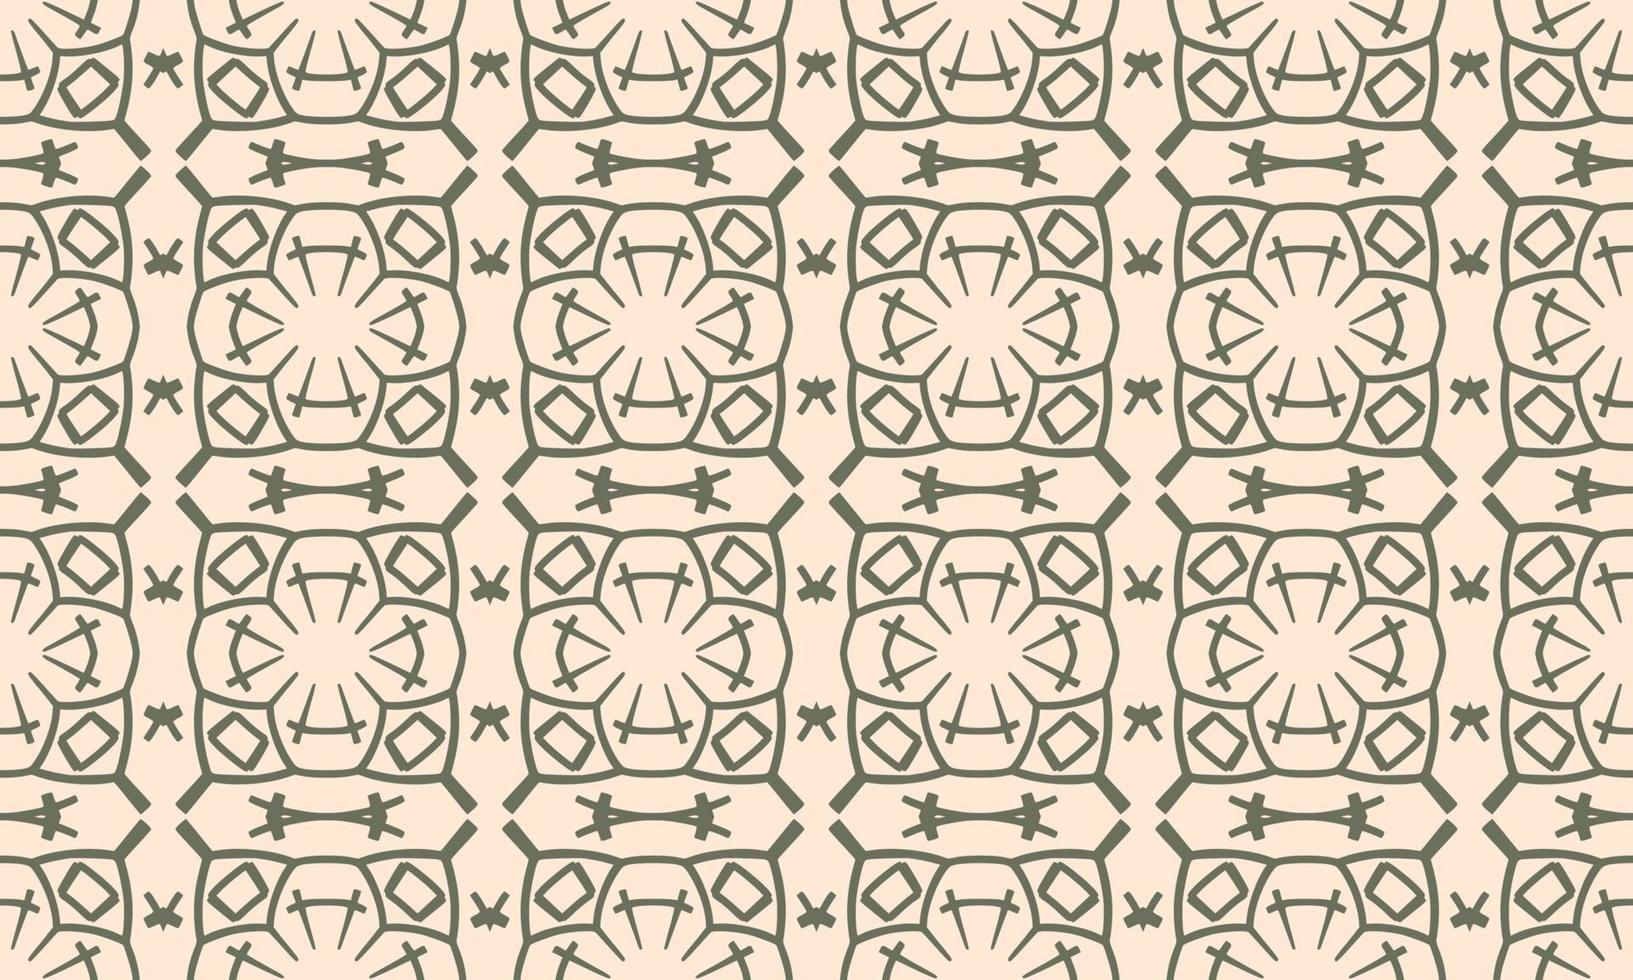 textura de fundo abstrato em estilo ornamental geométrico vetor